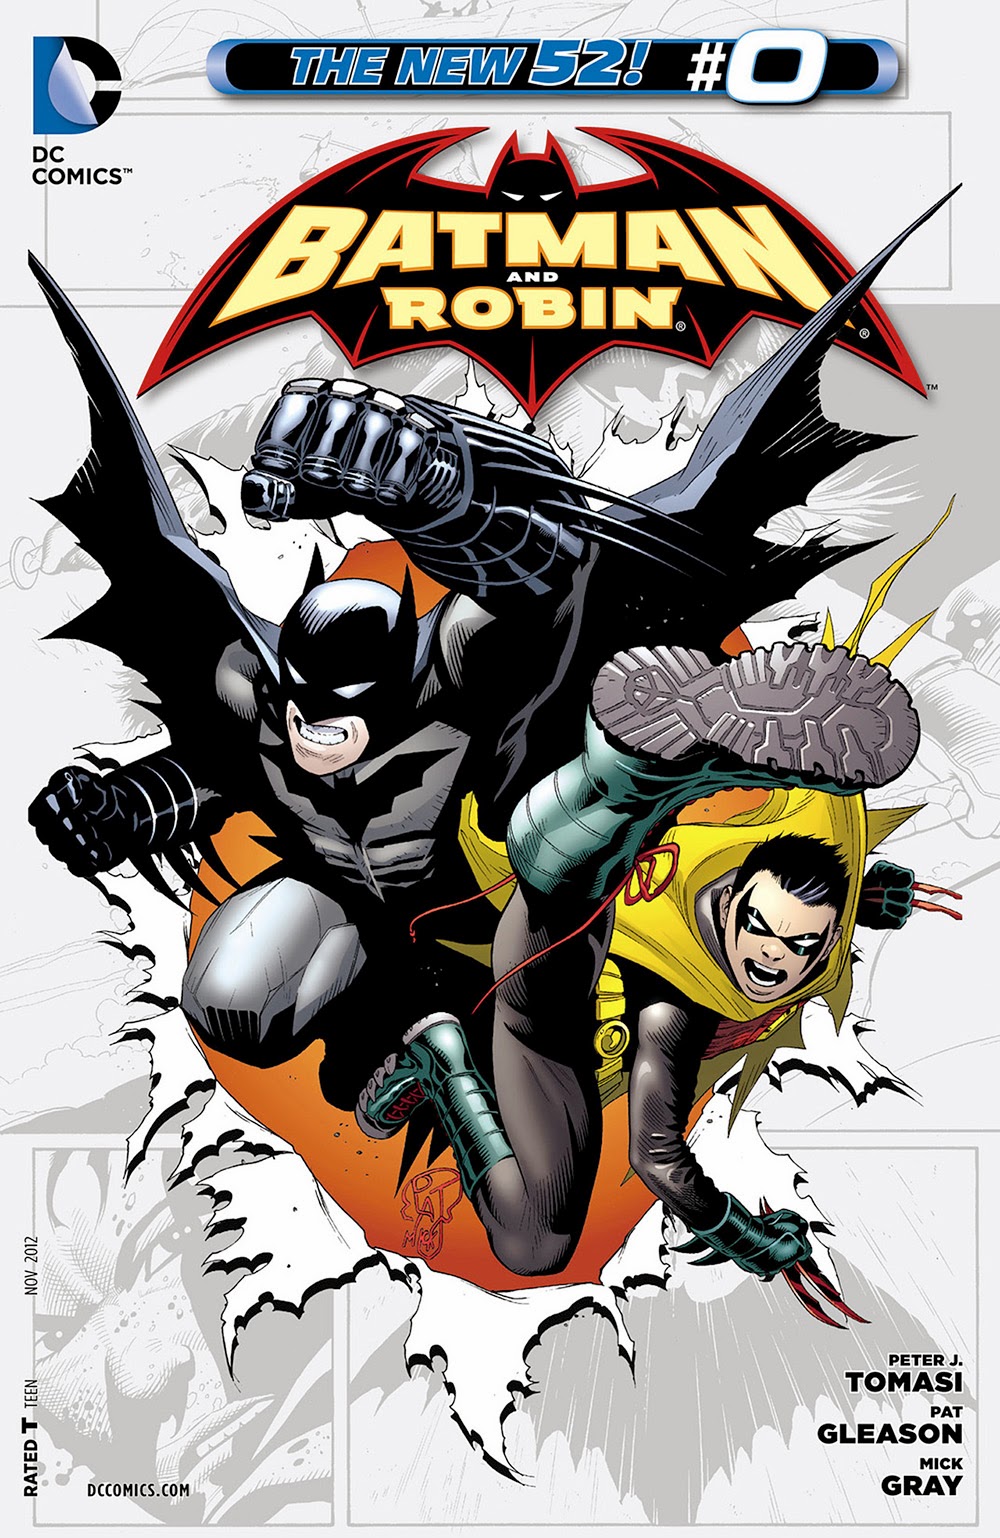 000 Batman Robin | Read 000 Batman Robin comic online in high quality. Read  Full Comic online for free - Read comics online in high quality .| READ  COMIC ONLINE